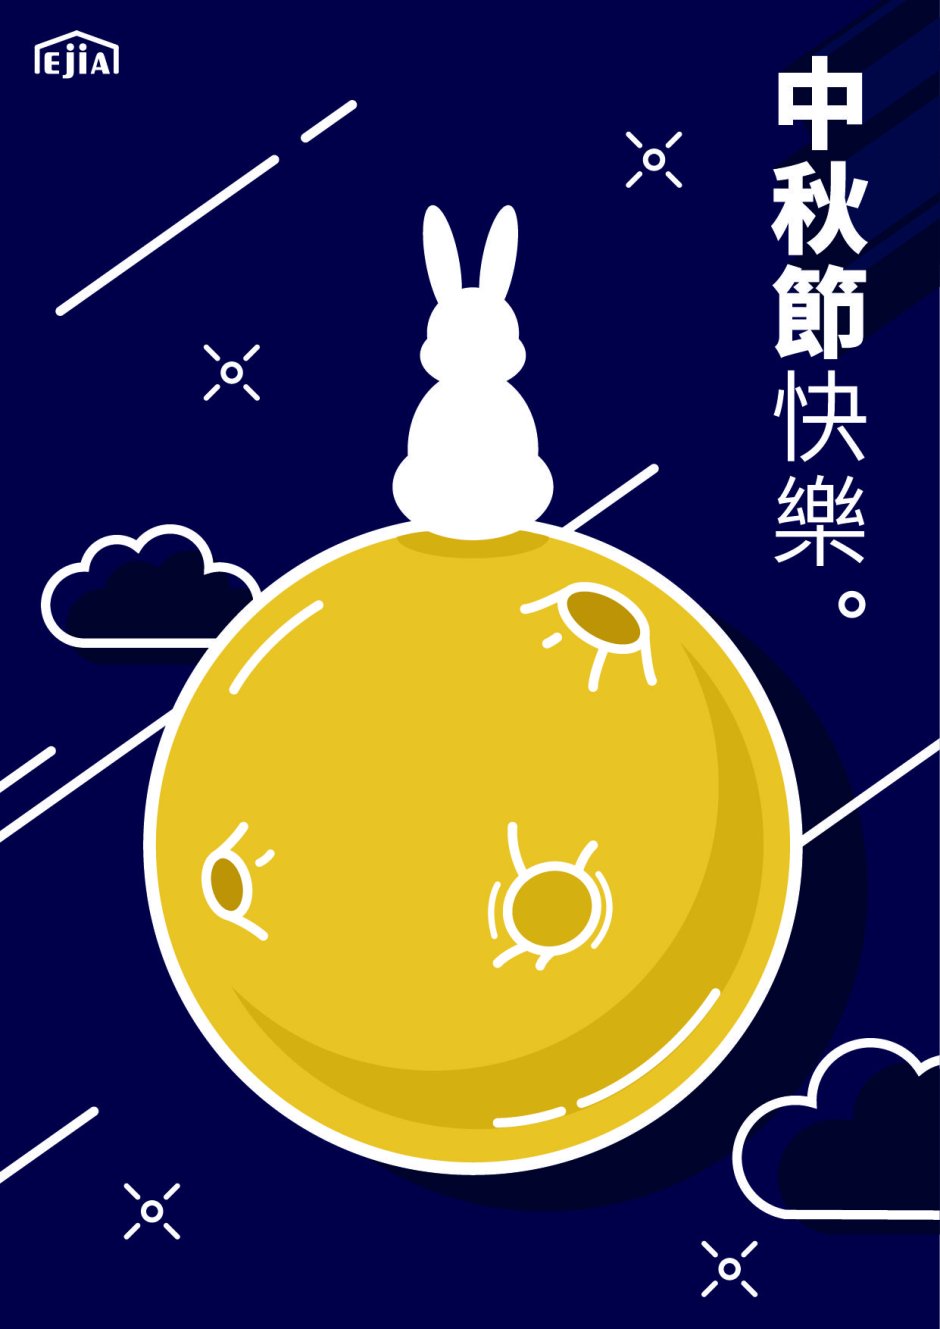 Moon Festival Bunny